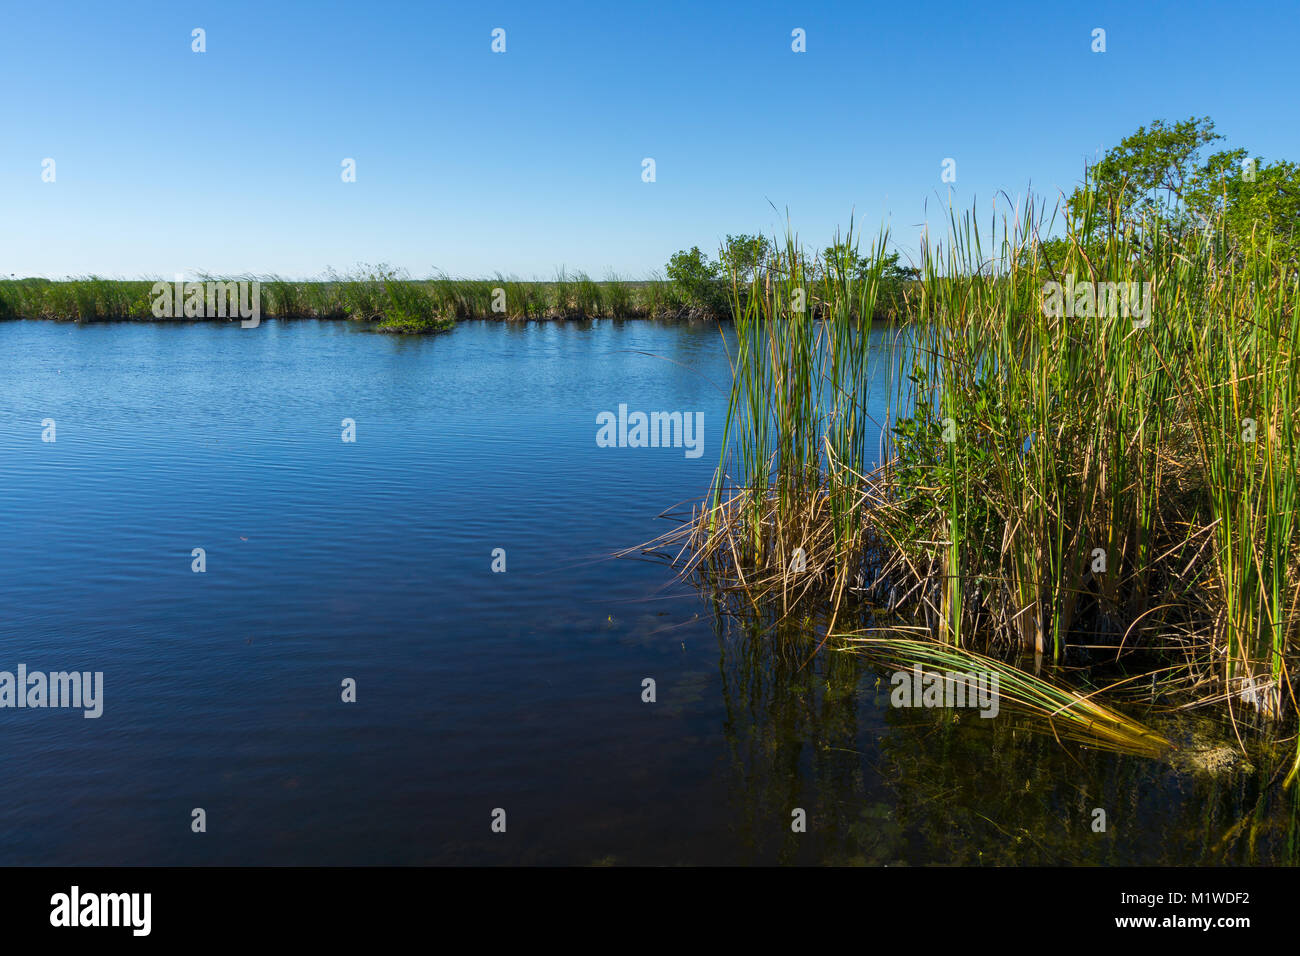 Stati Uniti d'America, Florida, silenziose acque di palude everglades fiume tra il verde sawgrass Foto Stock